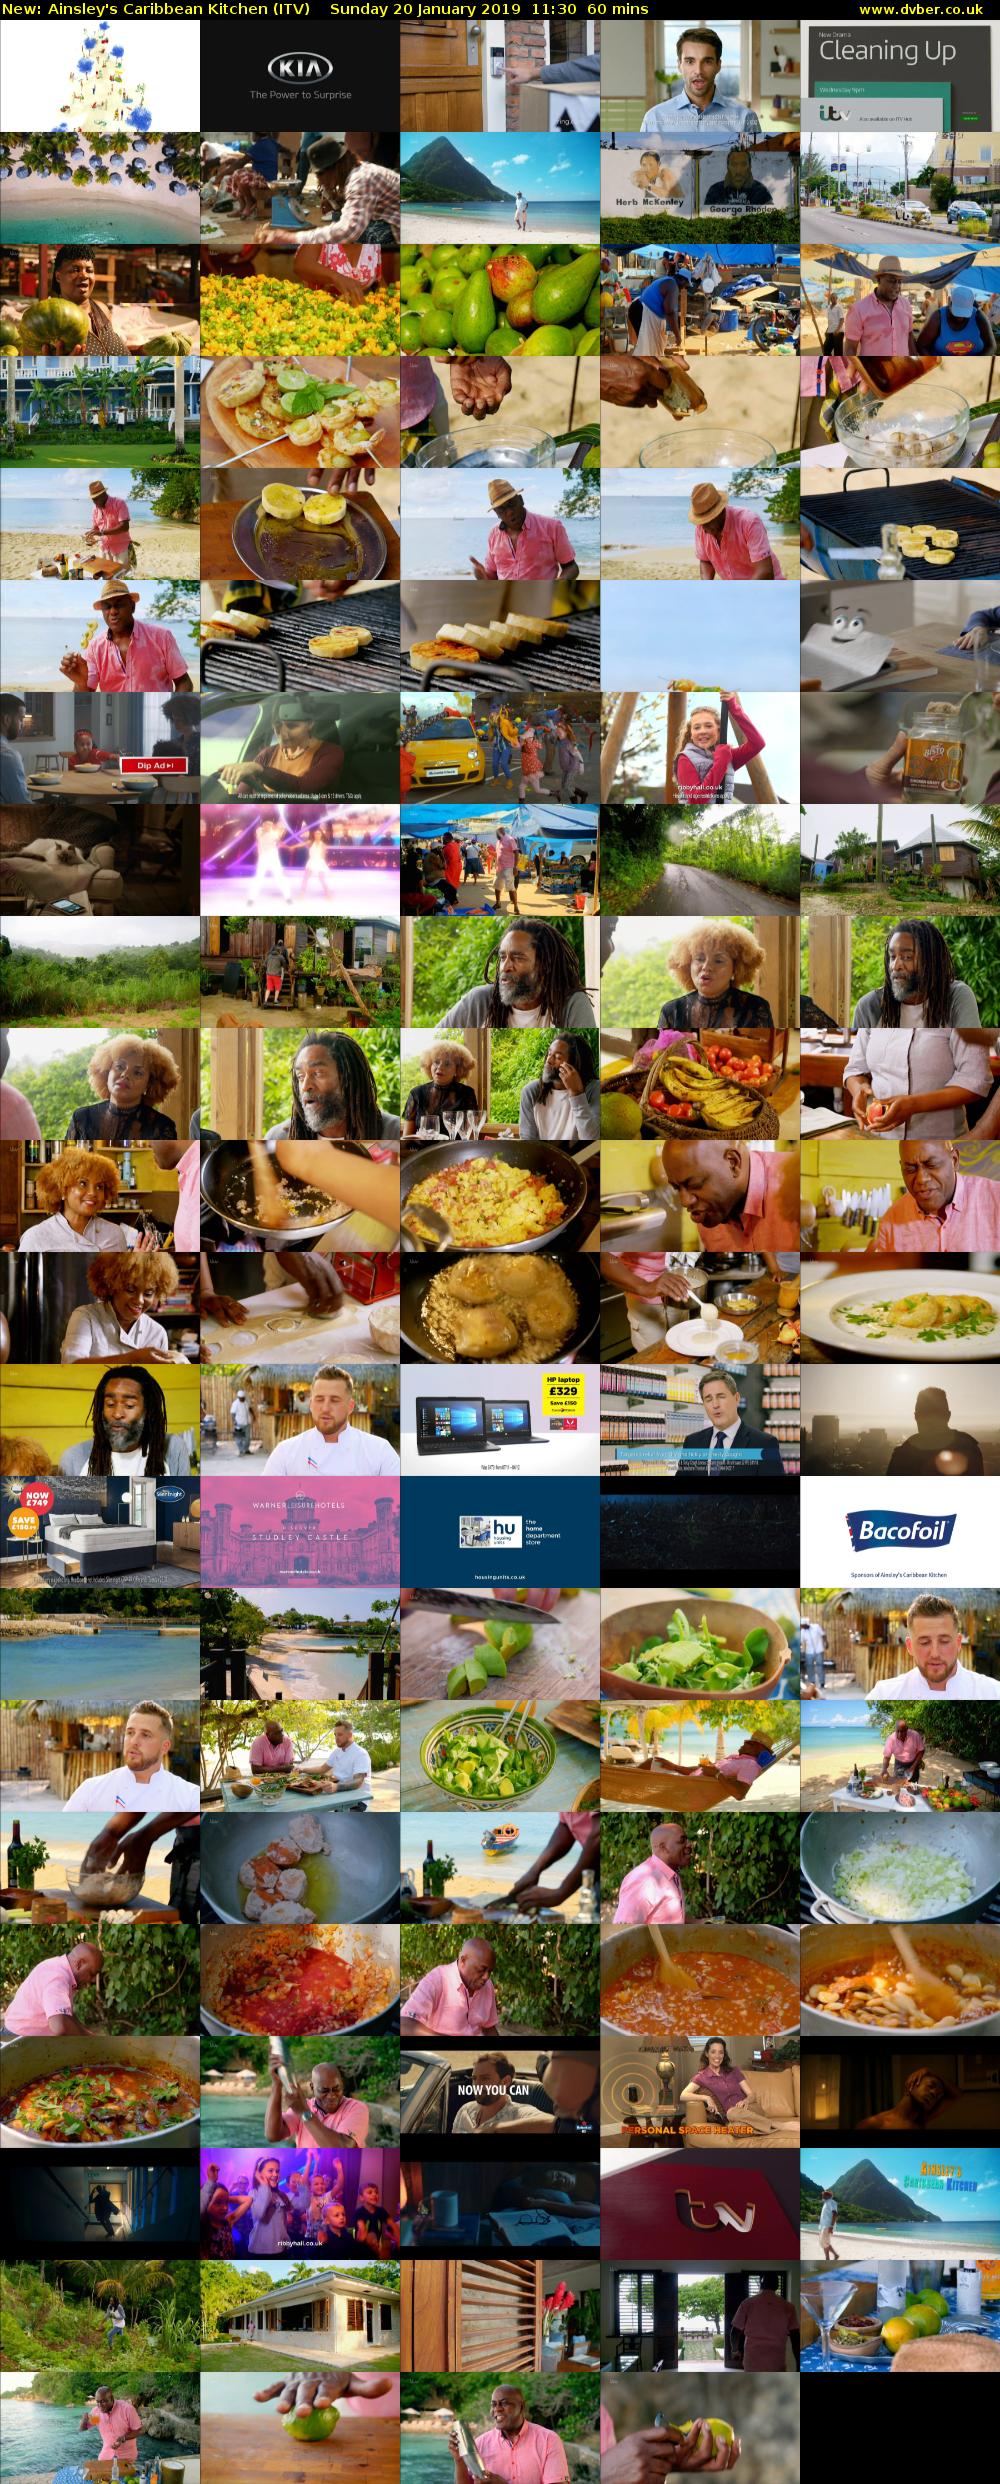 Ainsley's Caribbean Kitchen (ITV) Sunday 20 January 2019 11:30 - 12:30